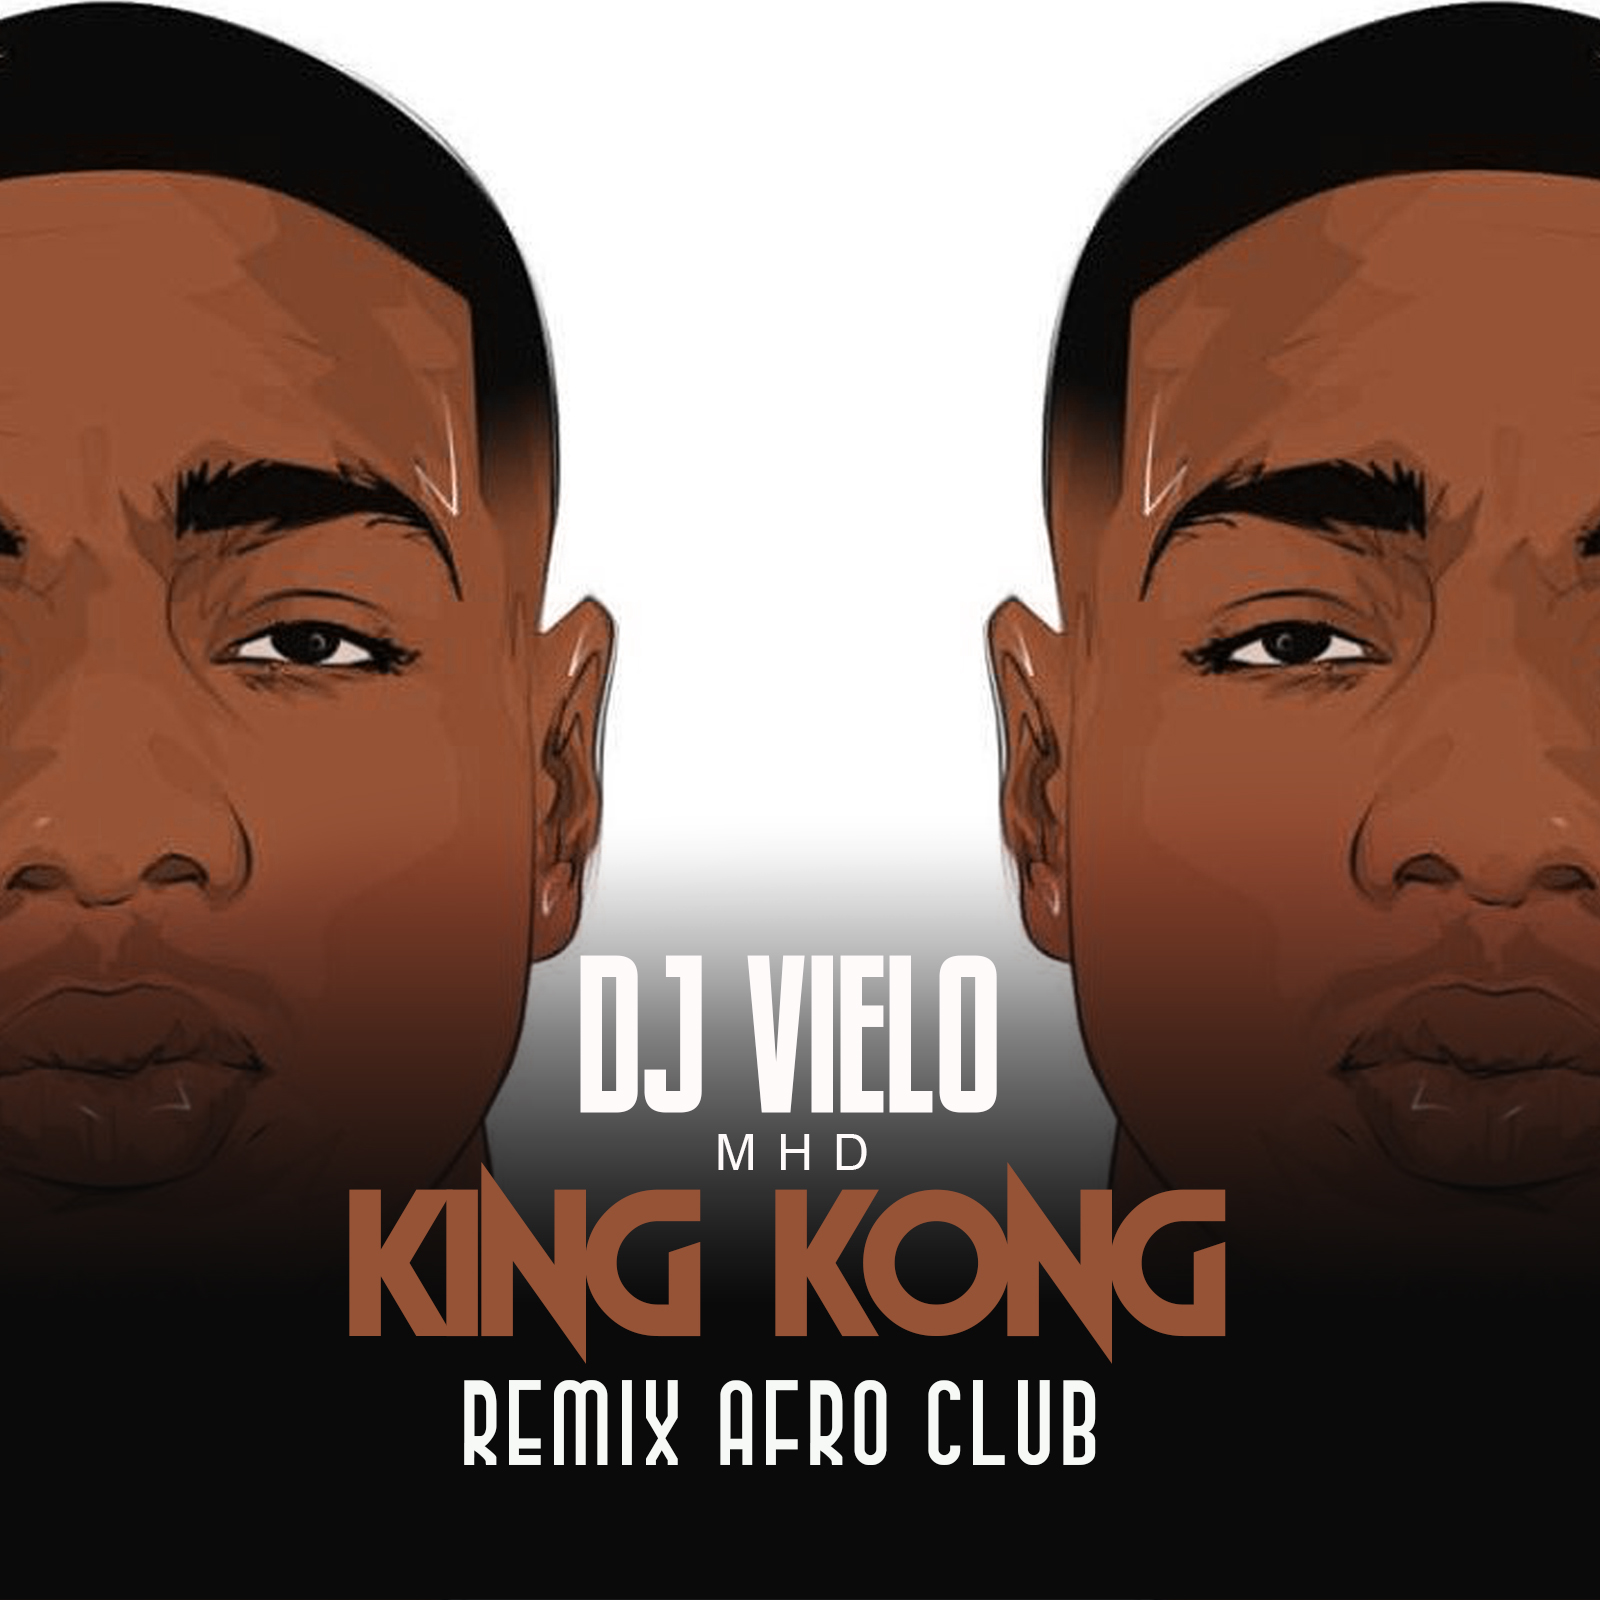 下载 Dj Vielo X MHD - AFRO TRAP Part.11 (King Kong) Remix Afro Club DISPO SUR SPOTIFY, DEEZER, ITUNES